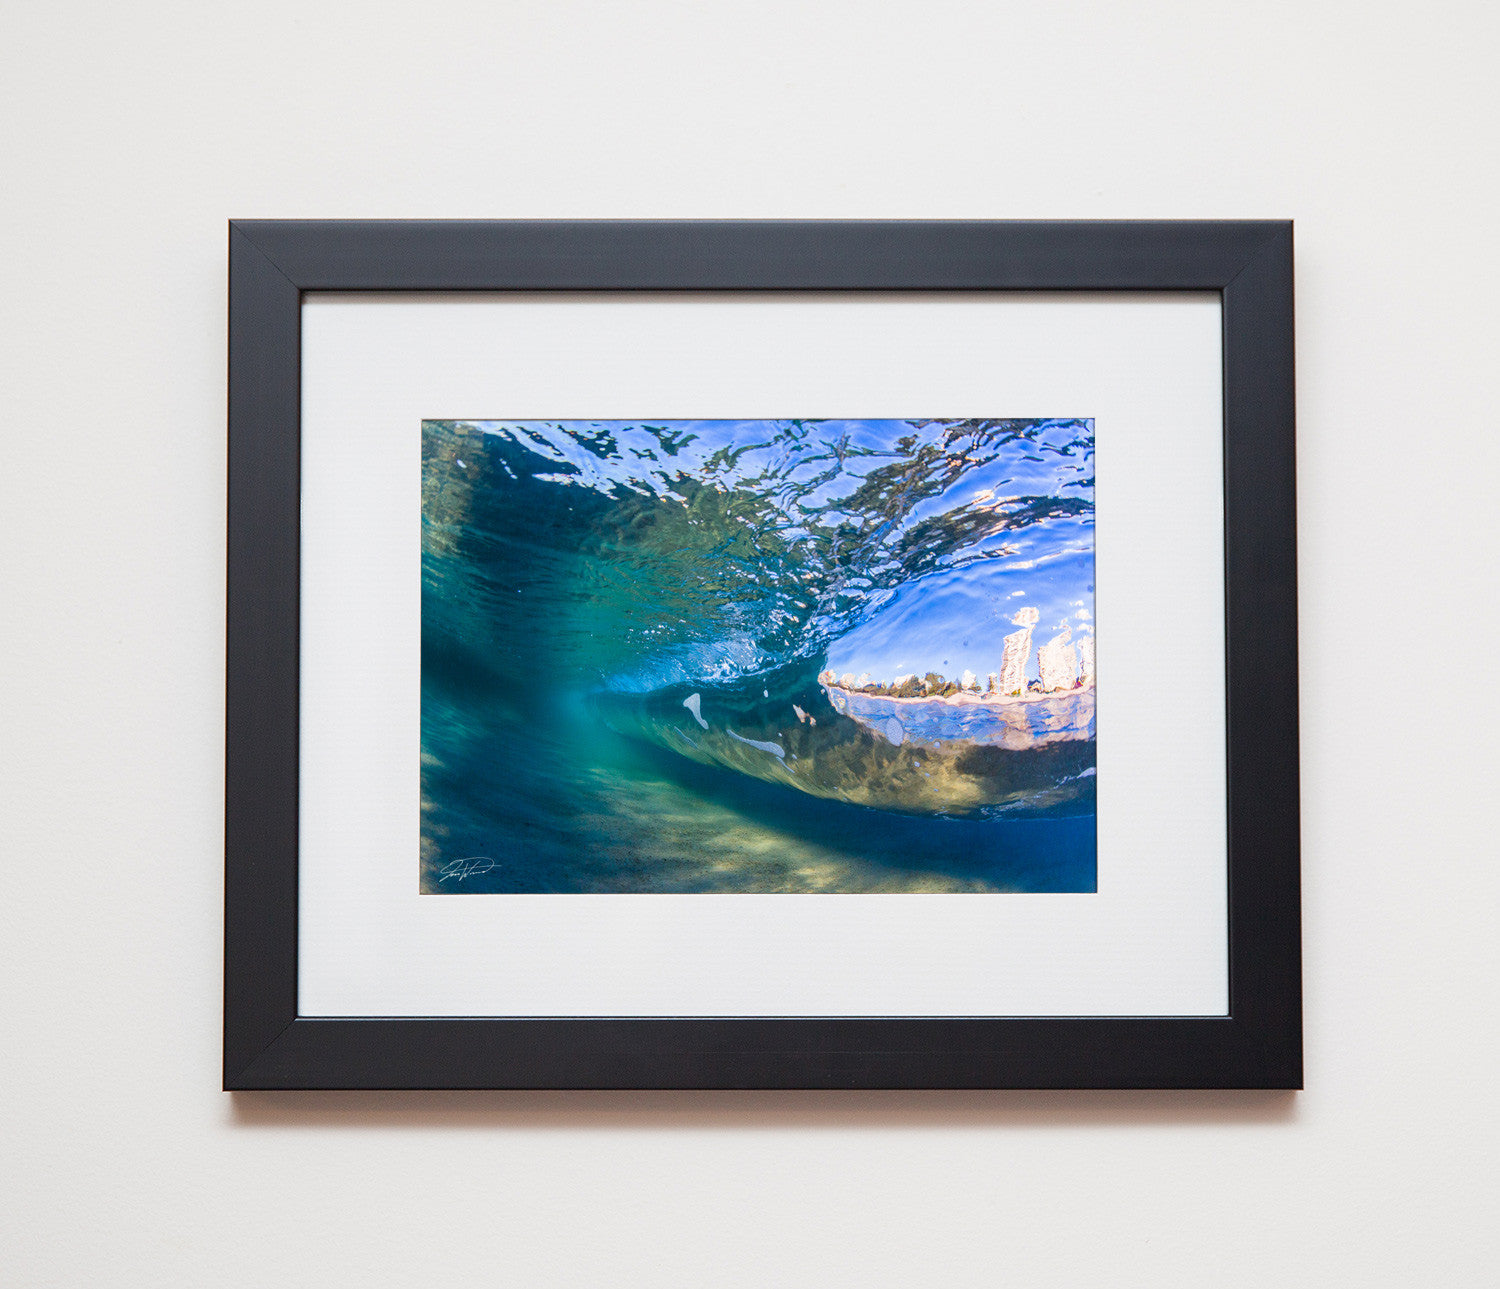 Classic black frame - Underwater photograph